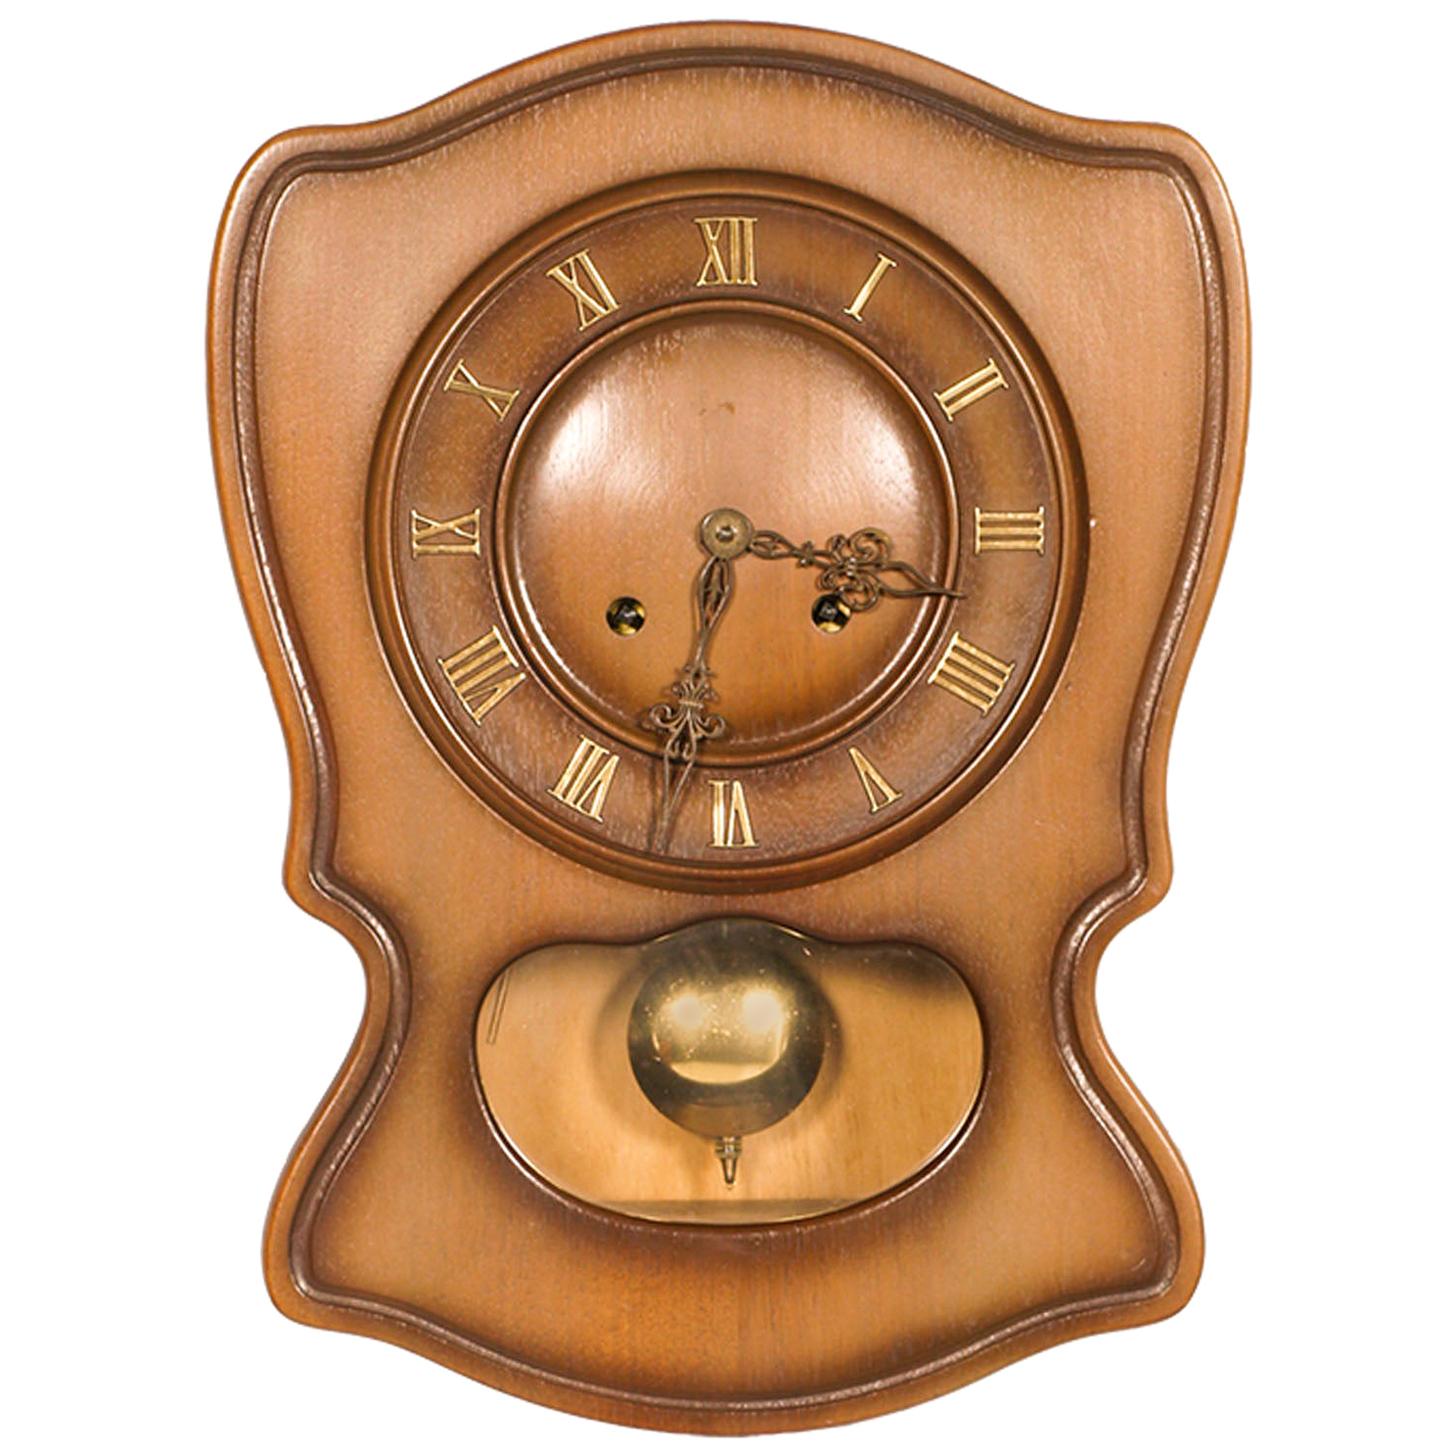 1920s Art Deco Pendulum Wall Clock in Lacquered Wood Case Mechanism Fex Zurich